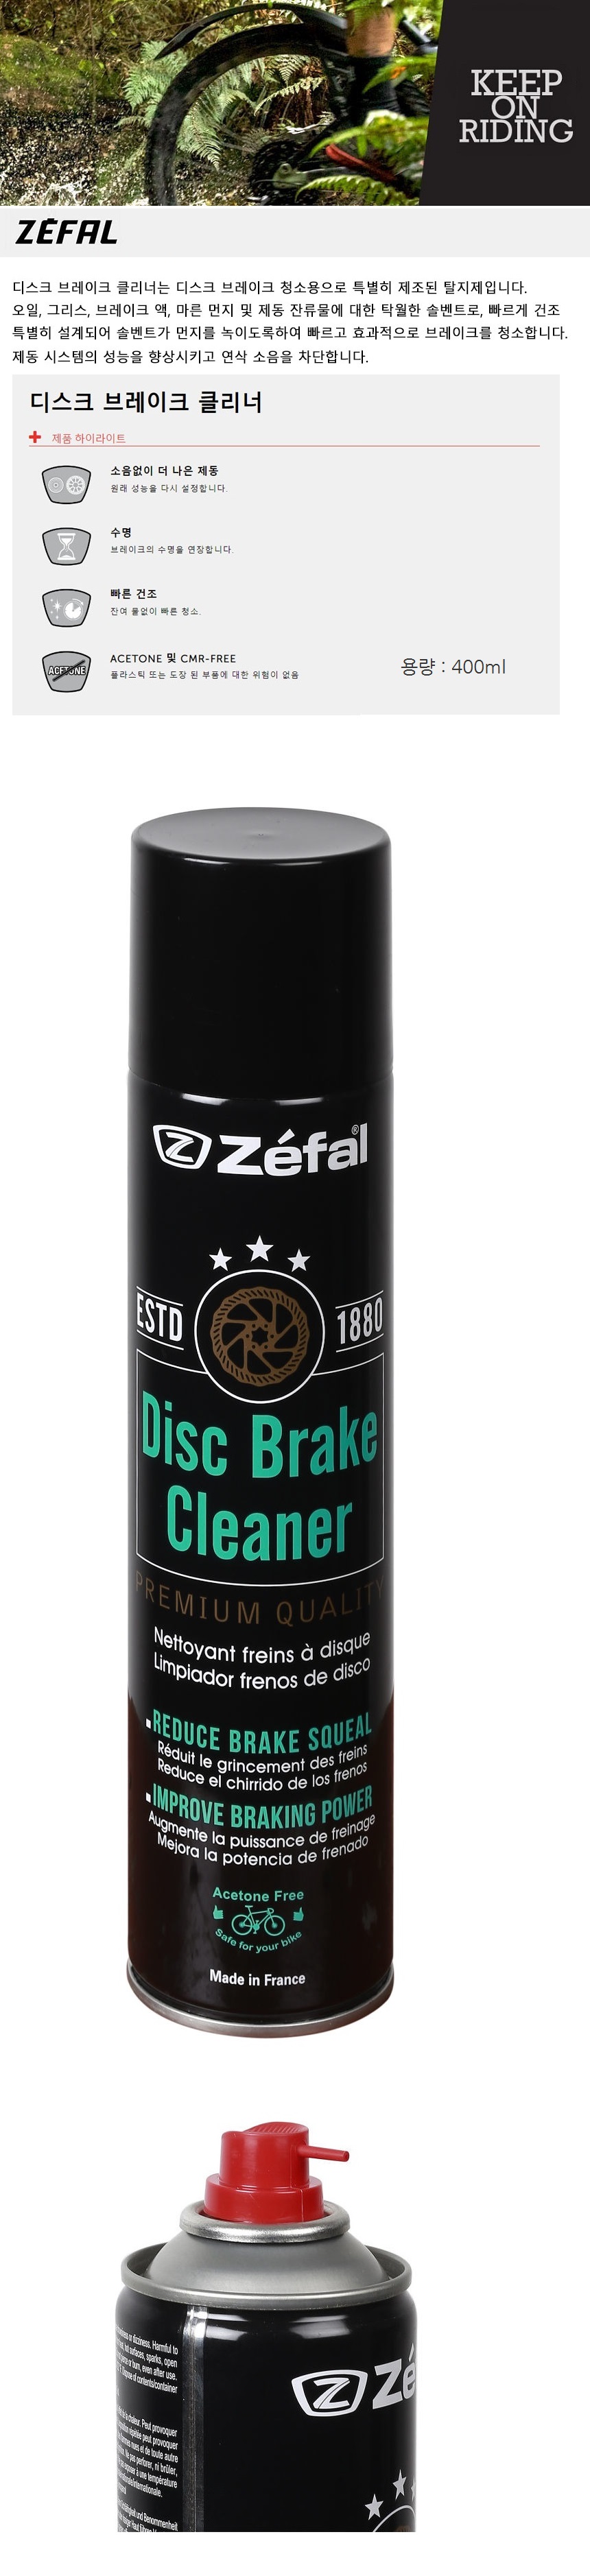 Zéfal - Disc Brake Cleaner - Zéfal